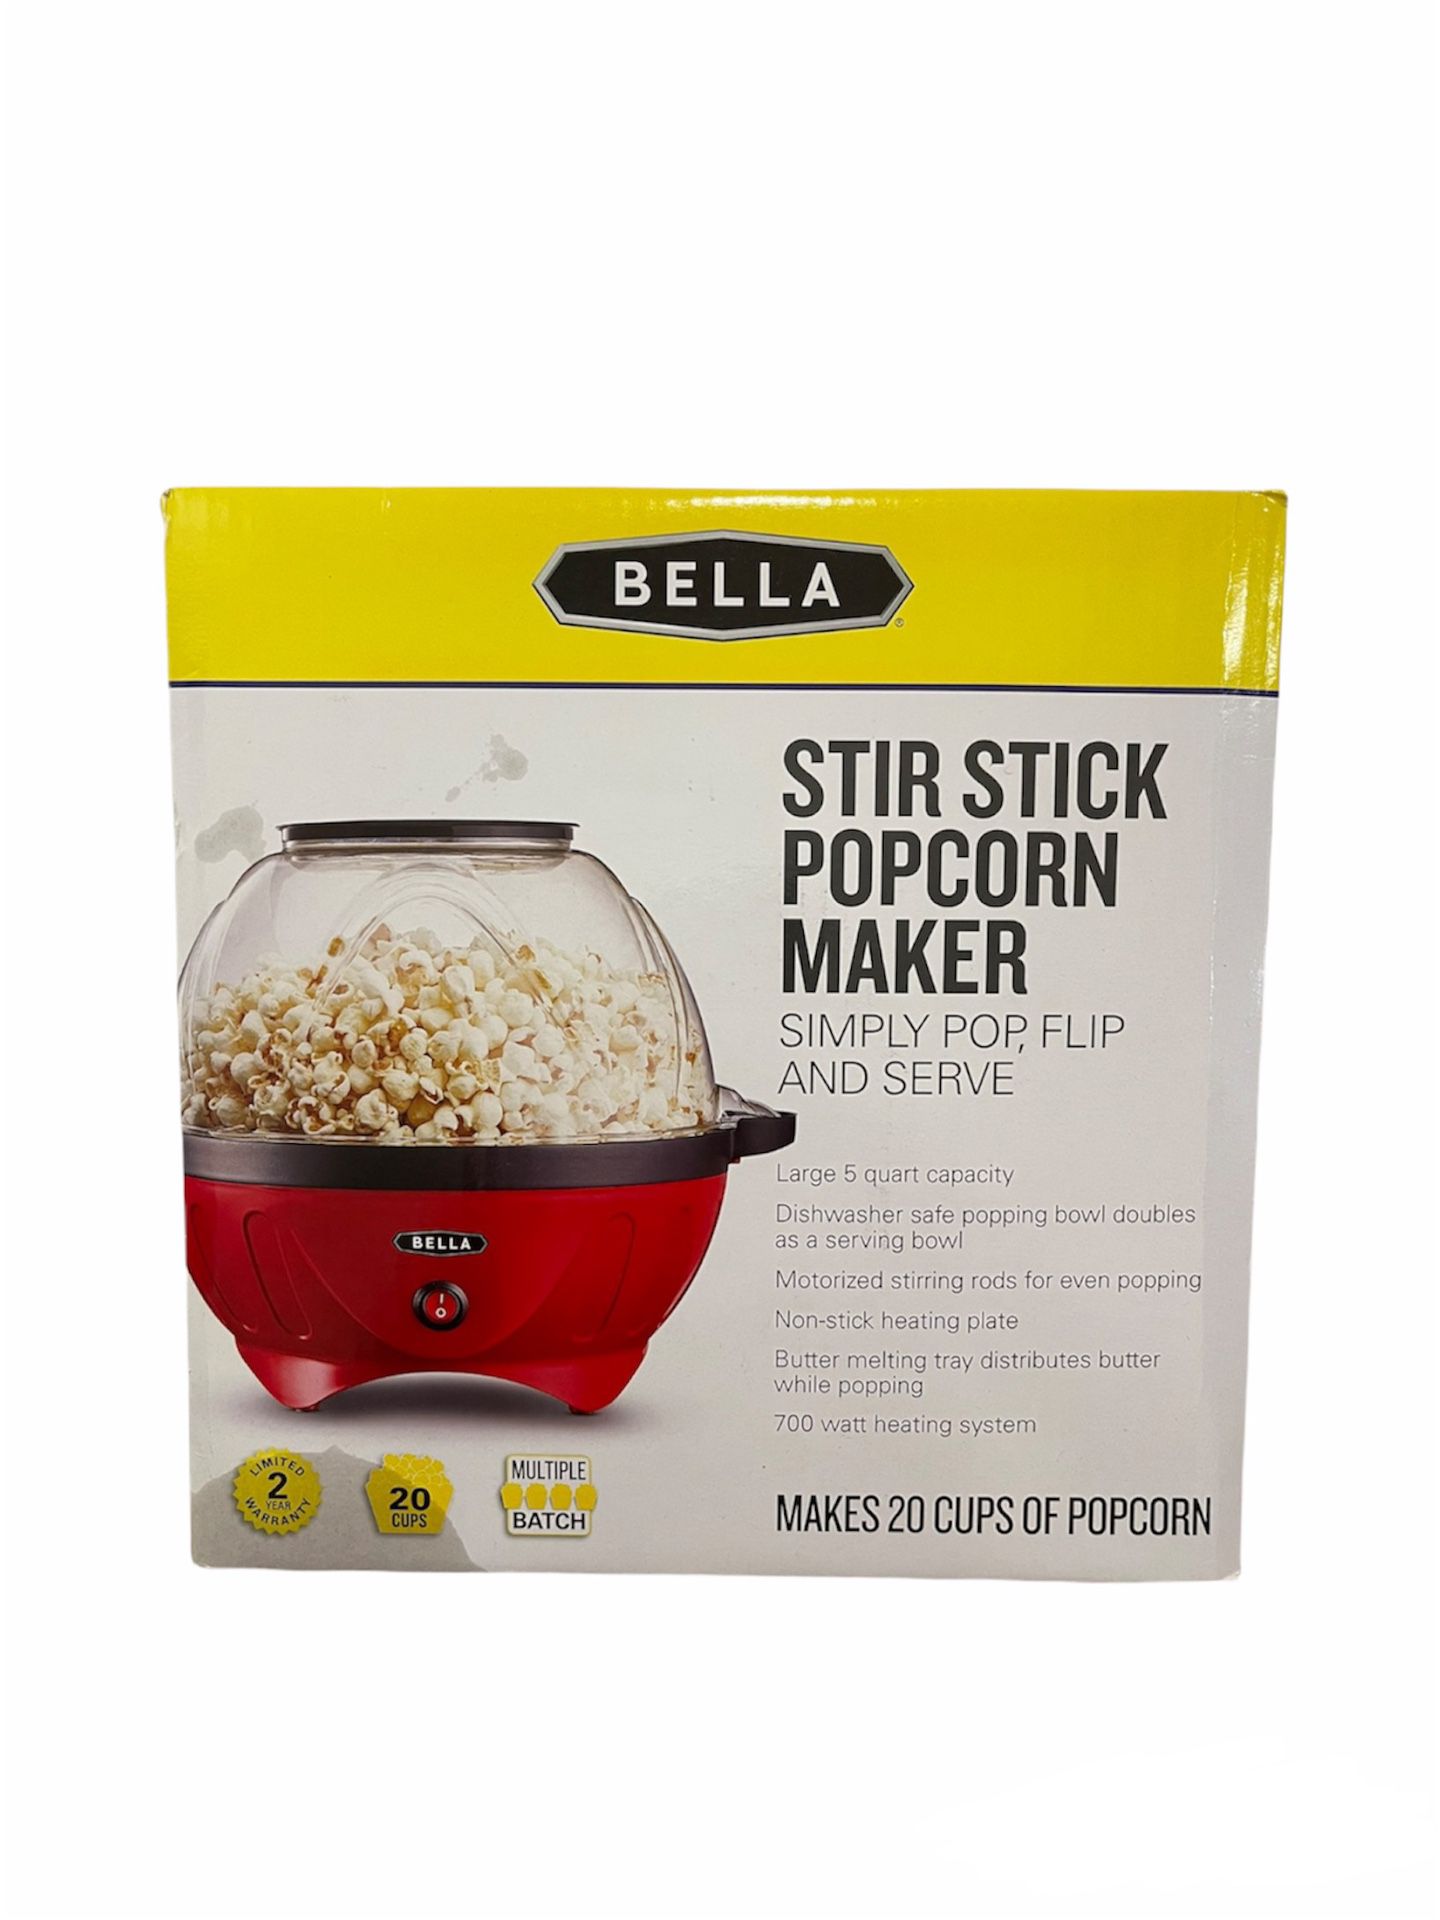 Bella Stir Stick Popcorn Maker